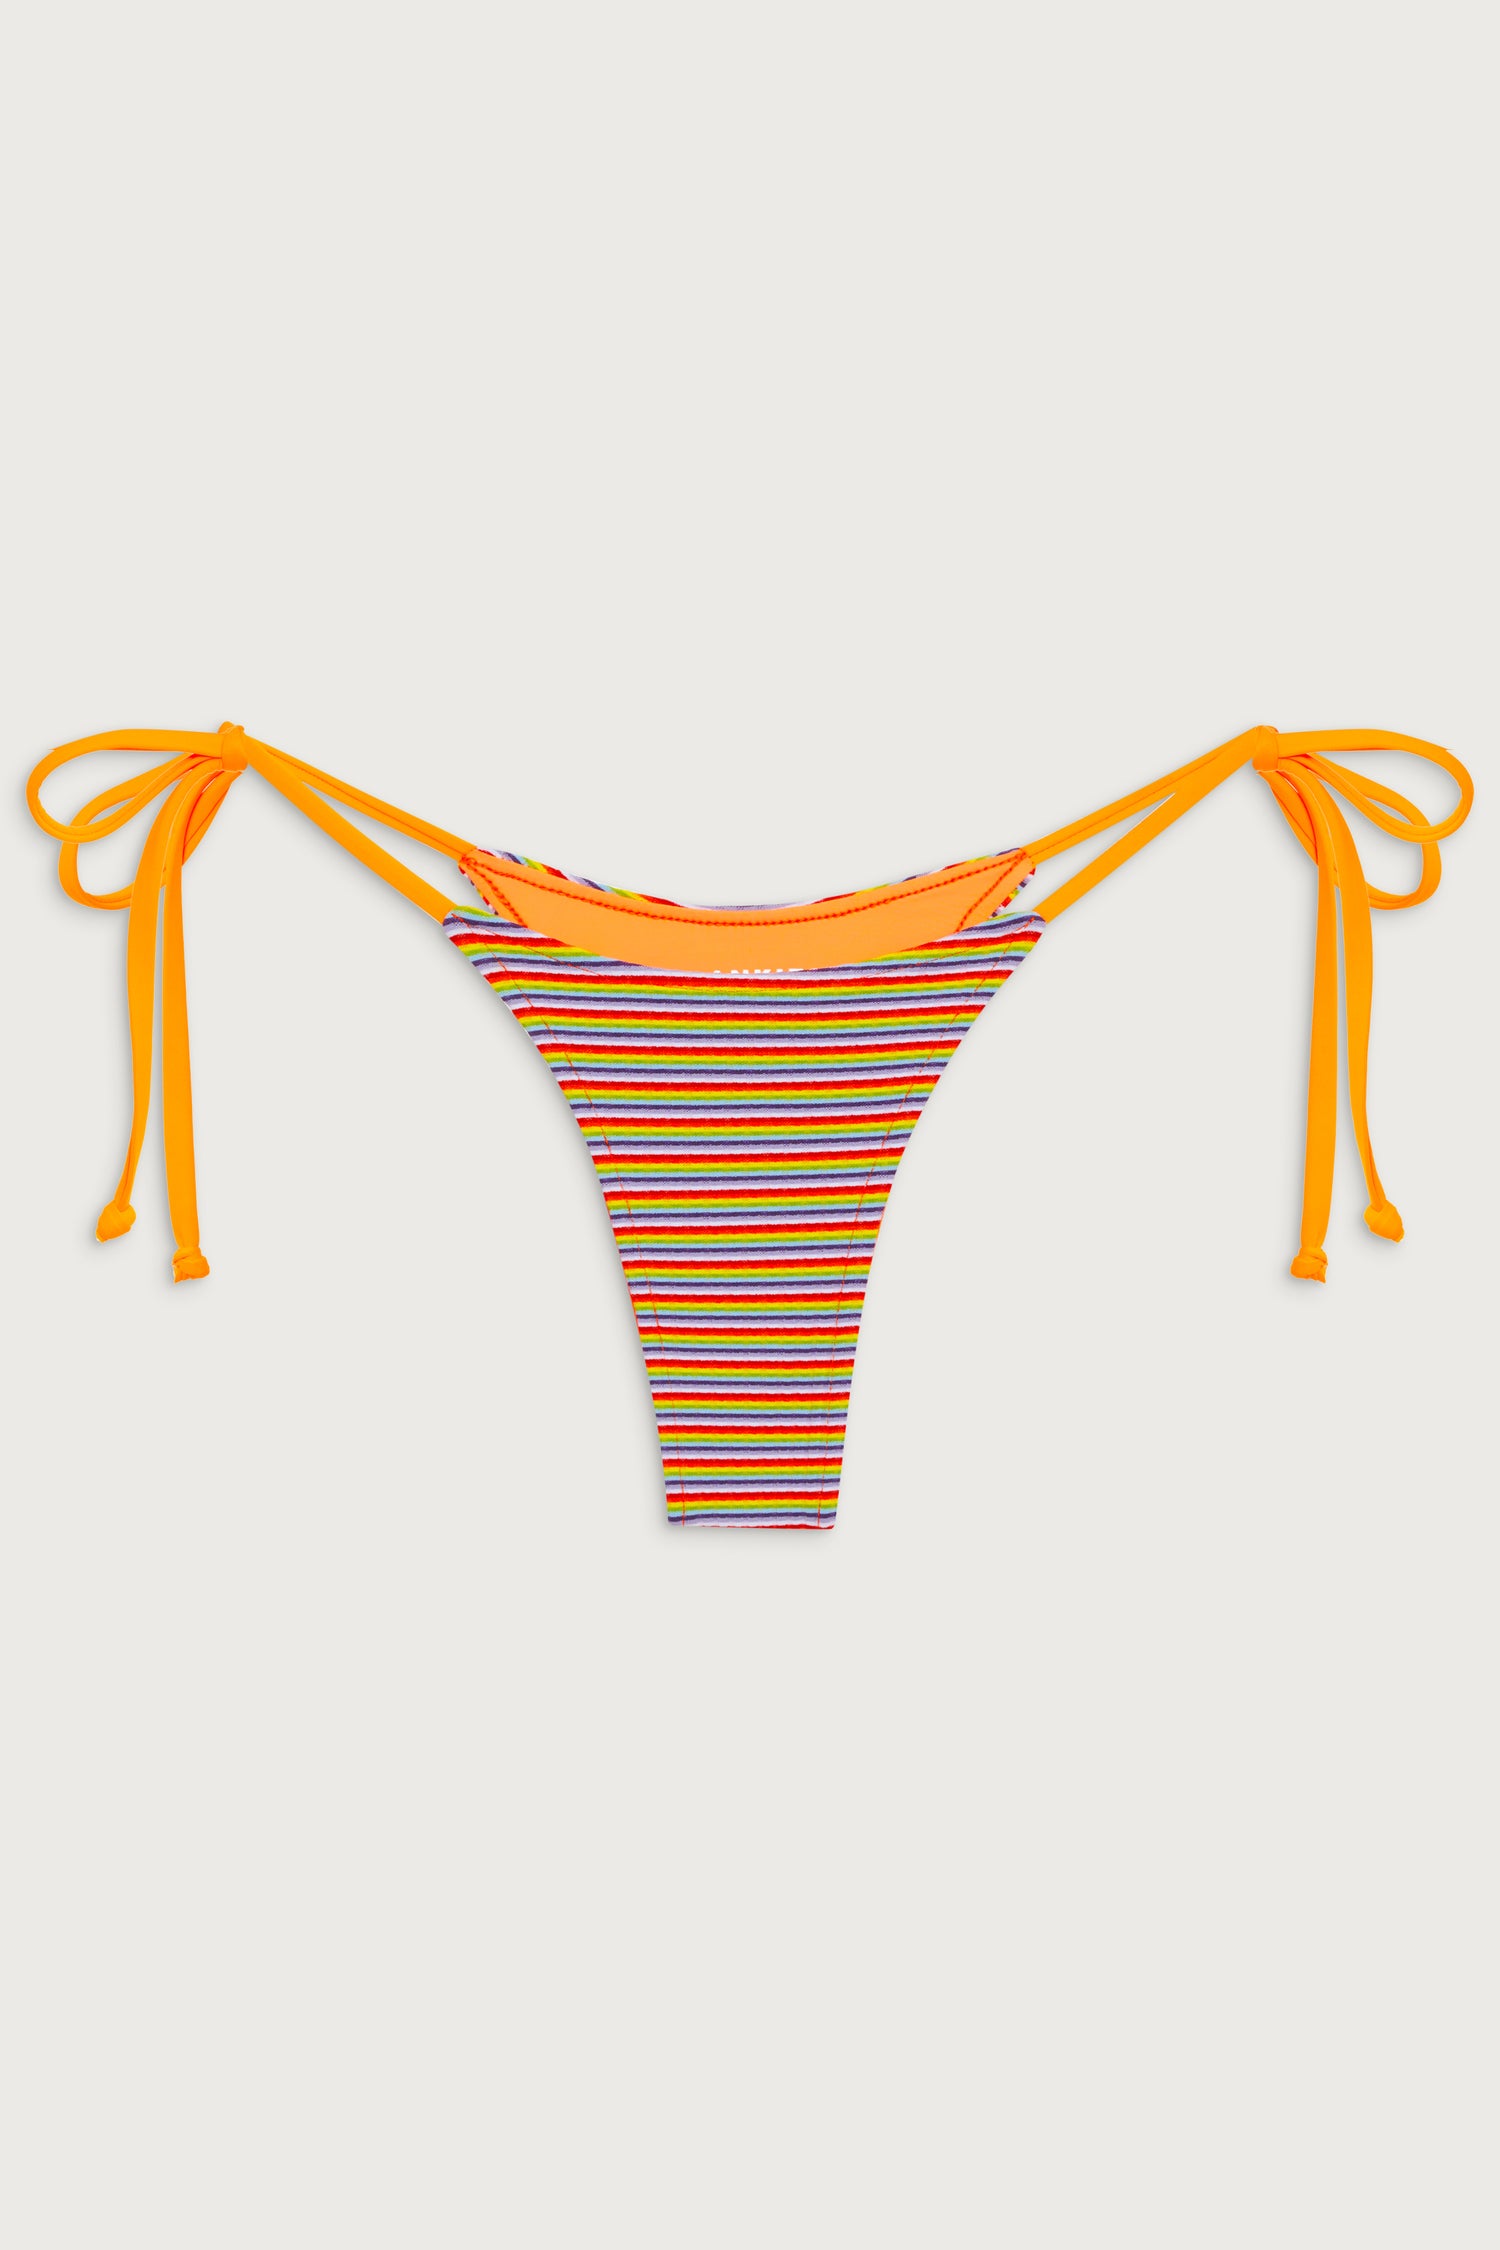 No Boundaries Bikini - Orange/White Stripe